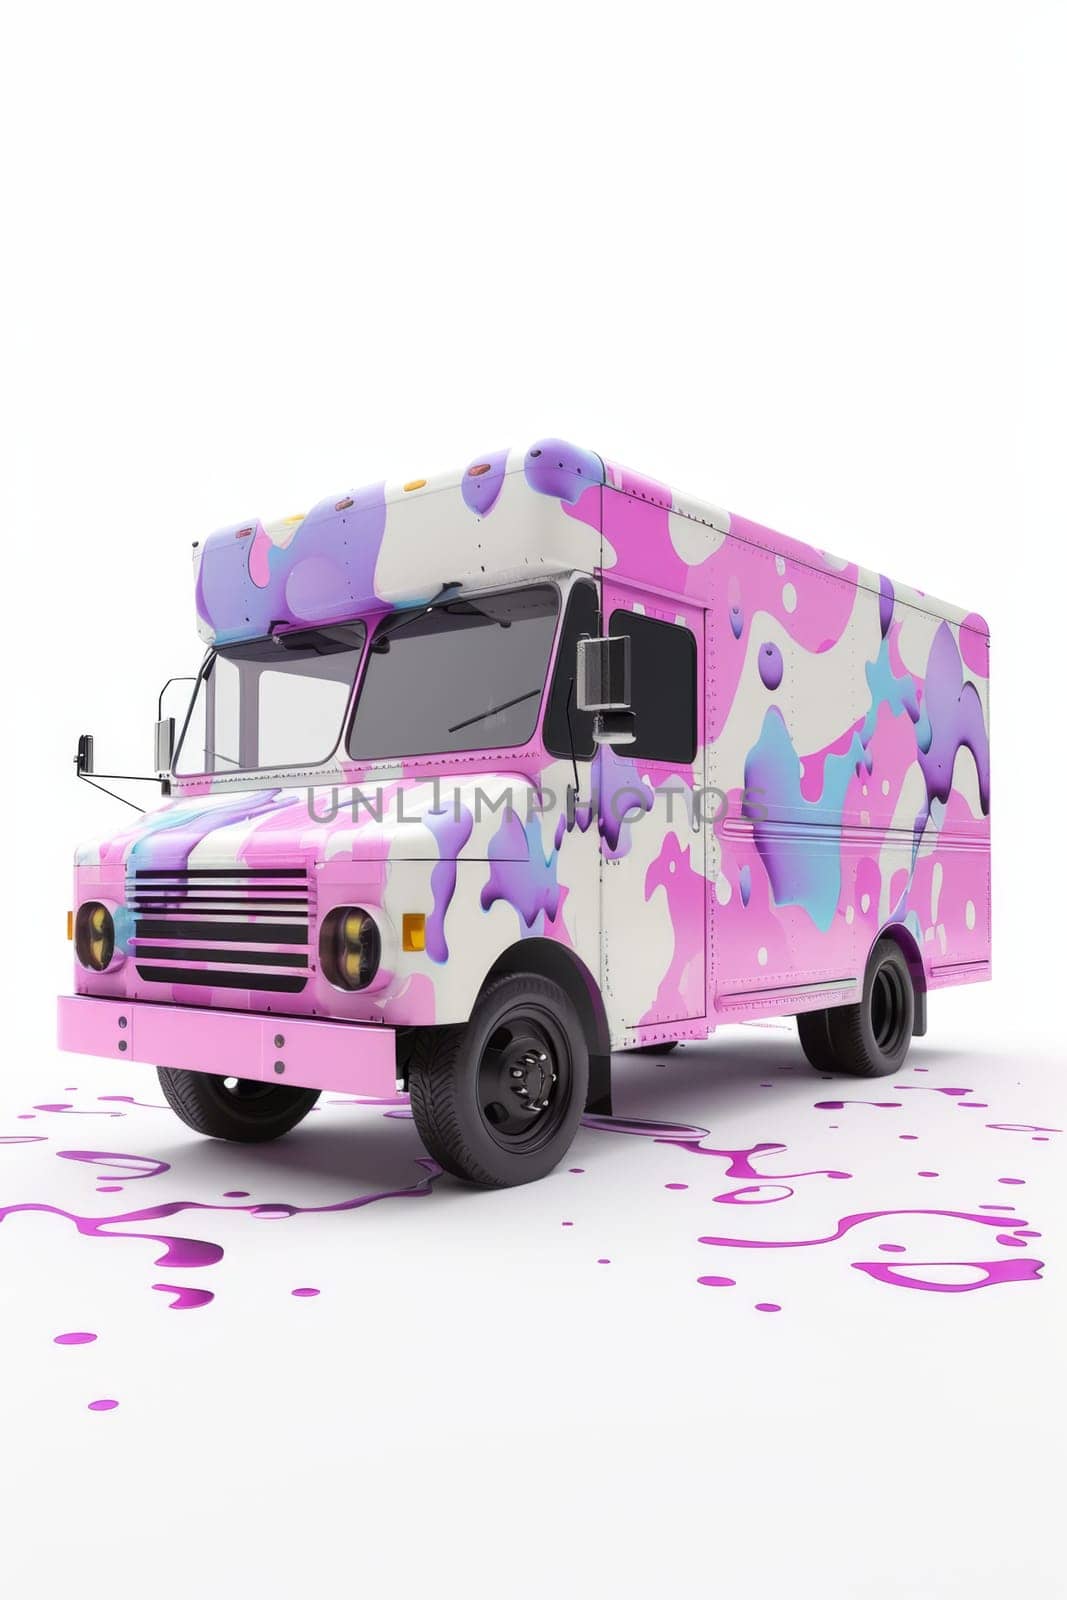 A modern pink van on a white background. 3D illustration.